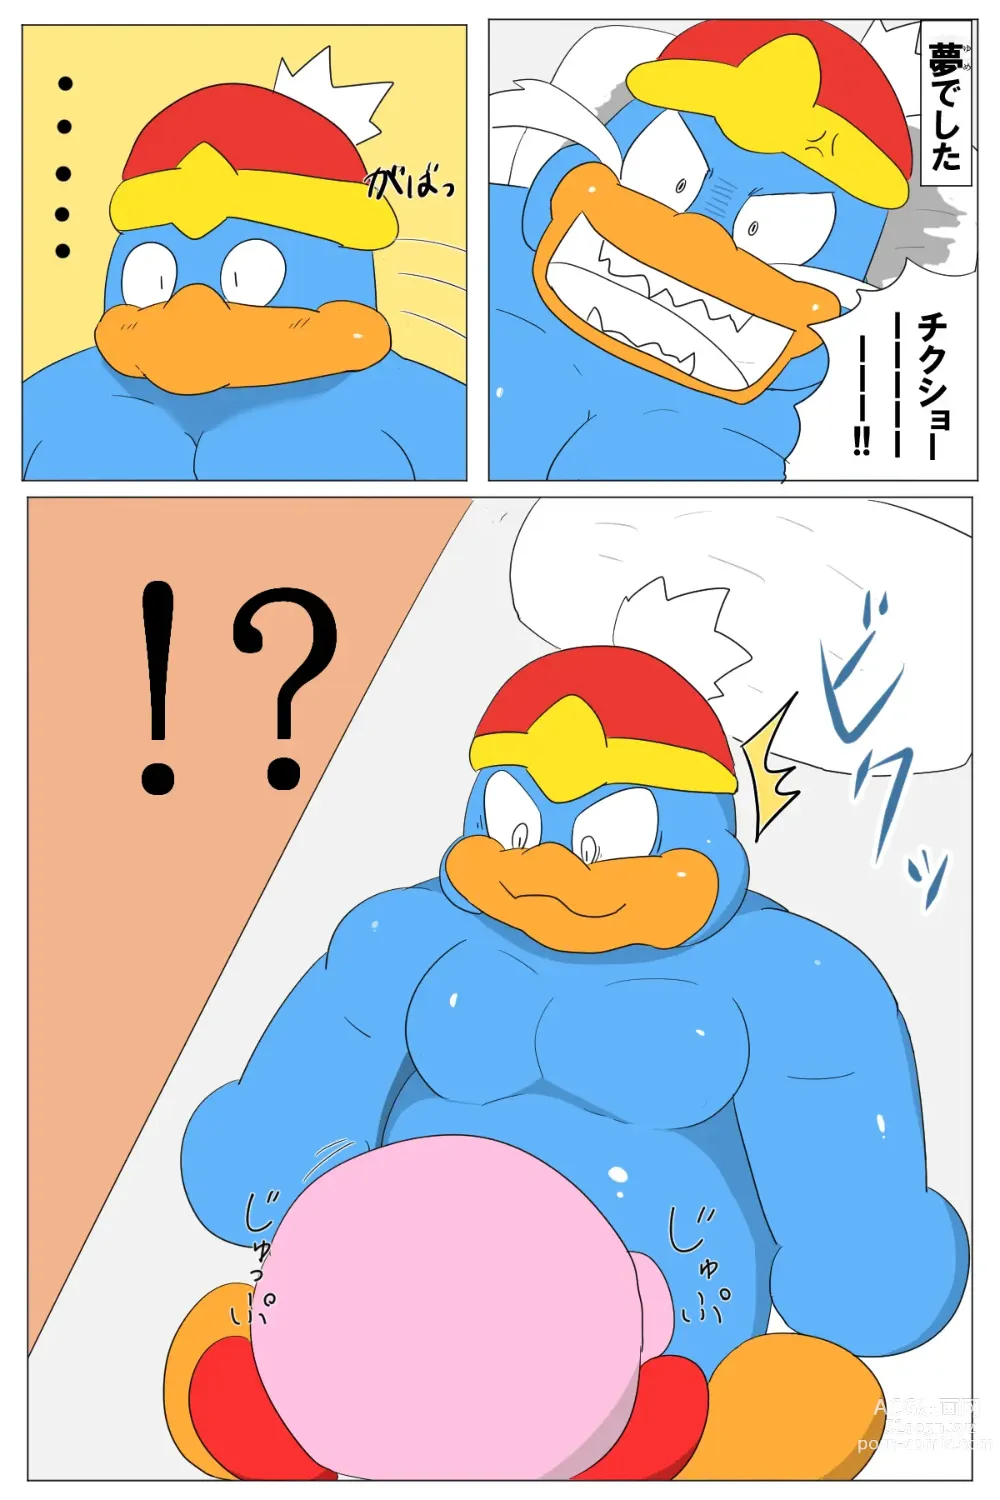 Page 2 of doujinshi <Kyokon Debu no Hi> DedeKirb Comic